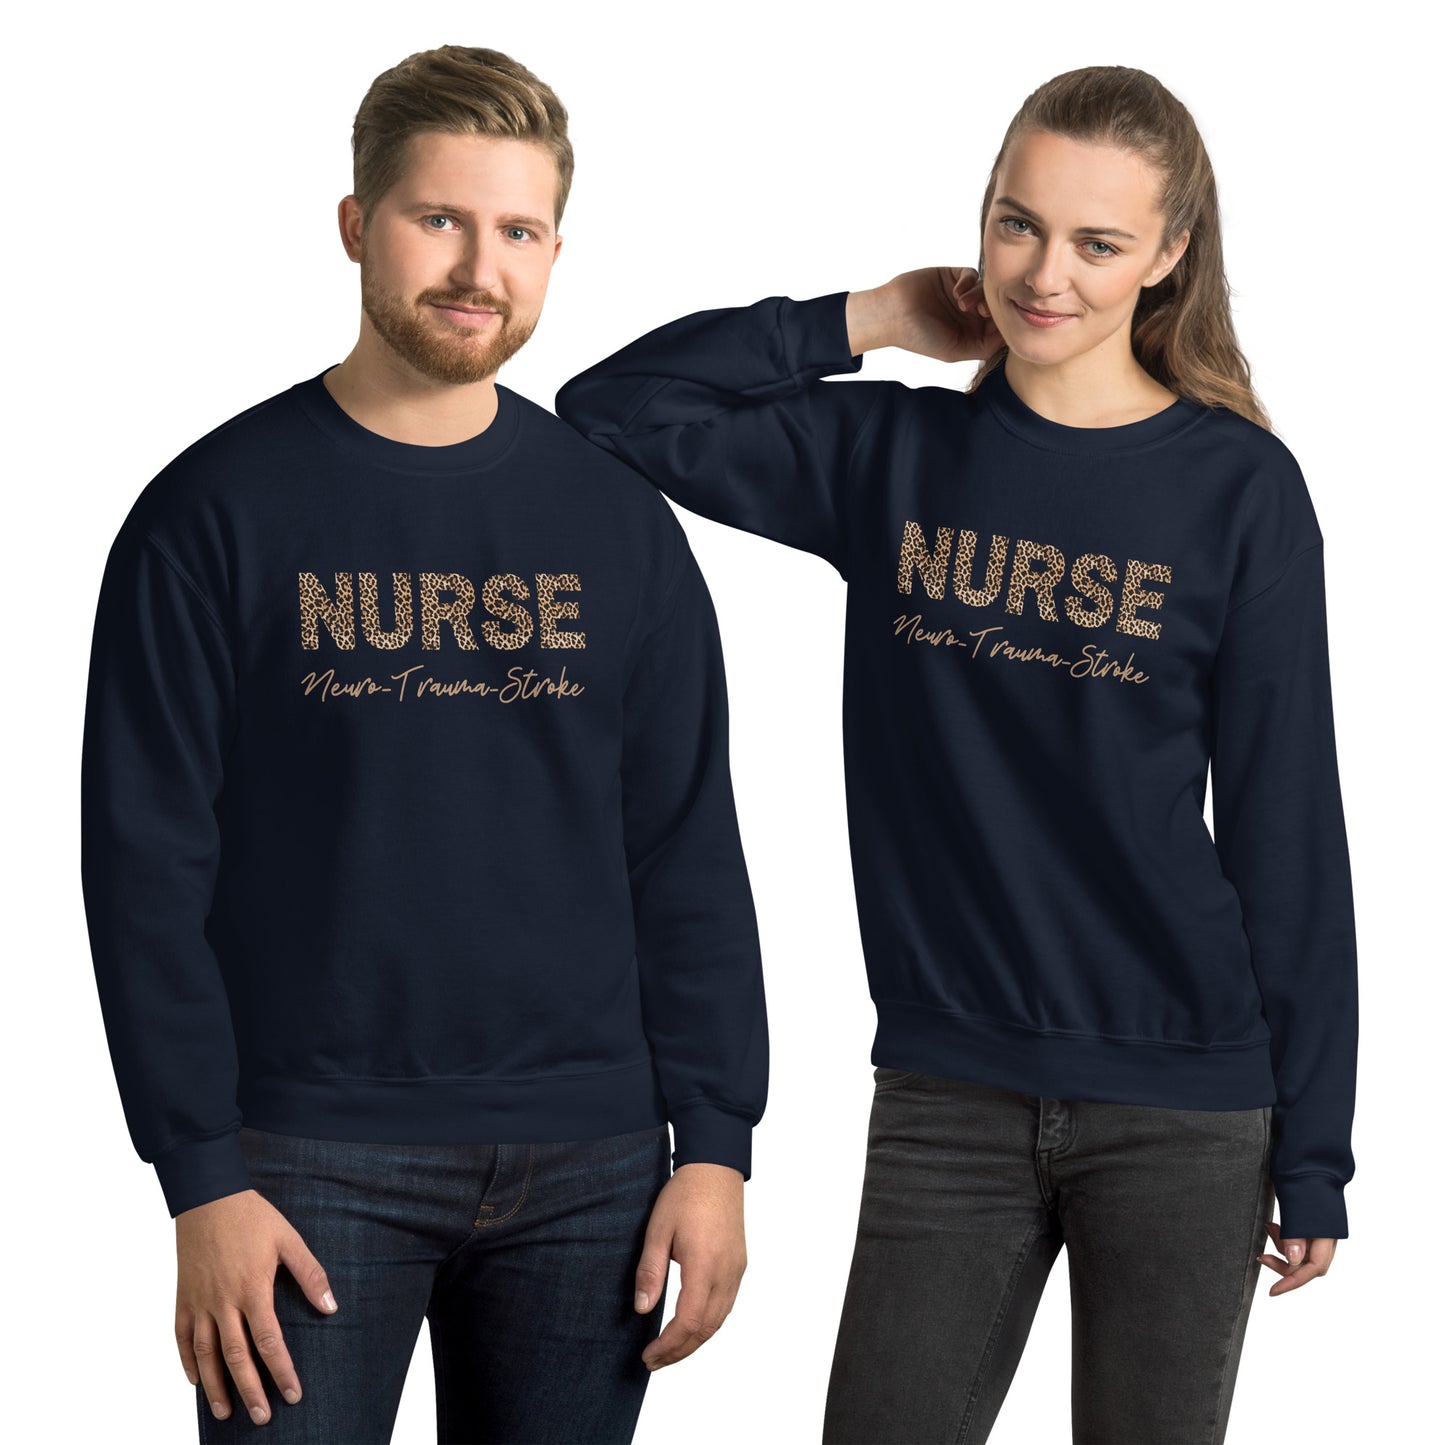 Neuro Trauma Stroke Nurse Animal Print Sweatshirt